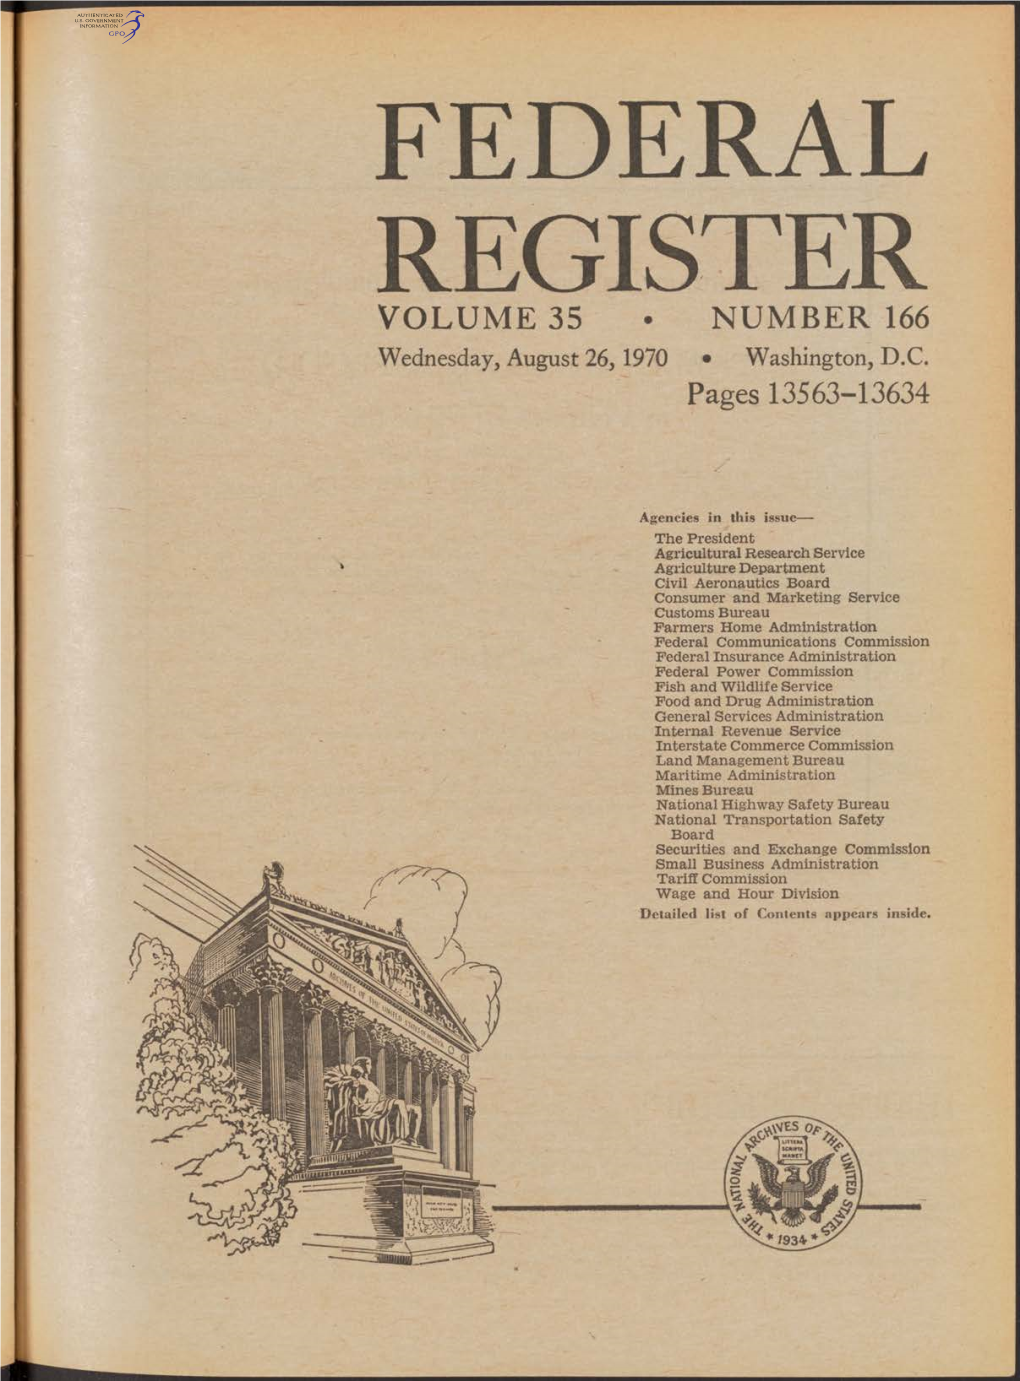 FEDERAL REGISTER VOLUME 35 • NUMBER 166 Wednesday, August 26,1970 • Washington, D.C